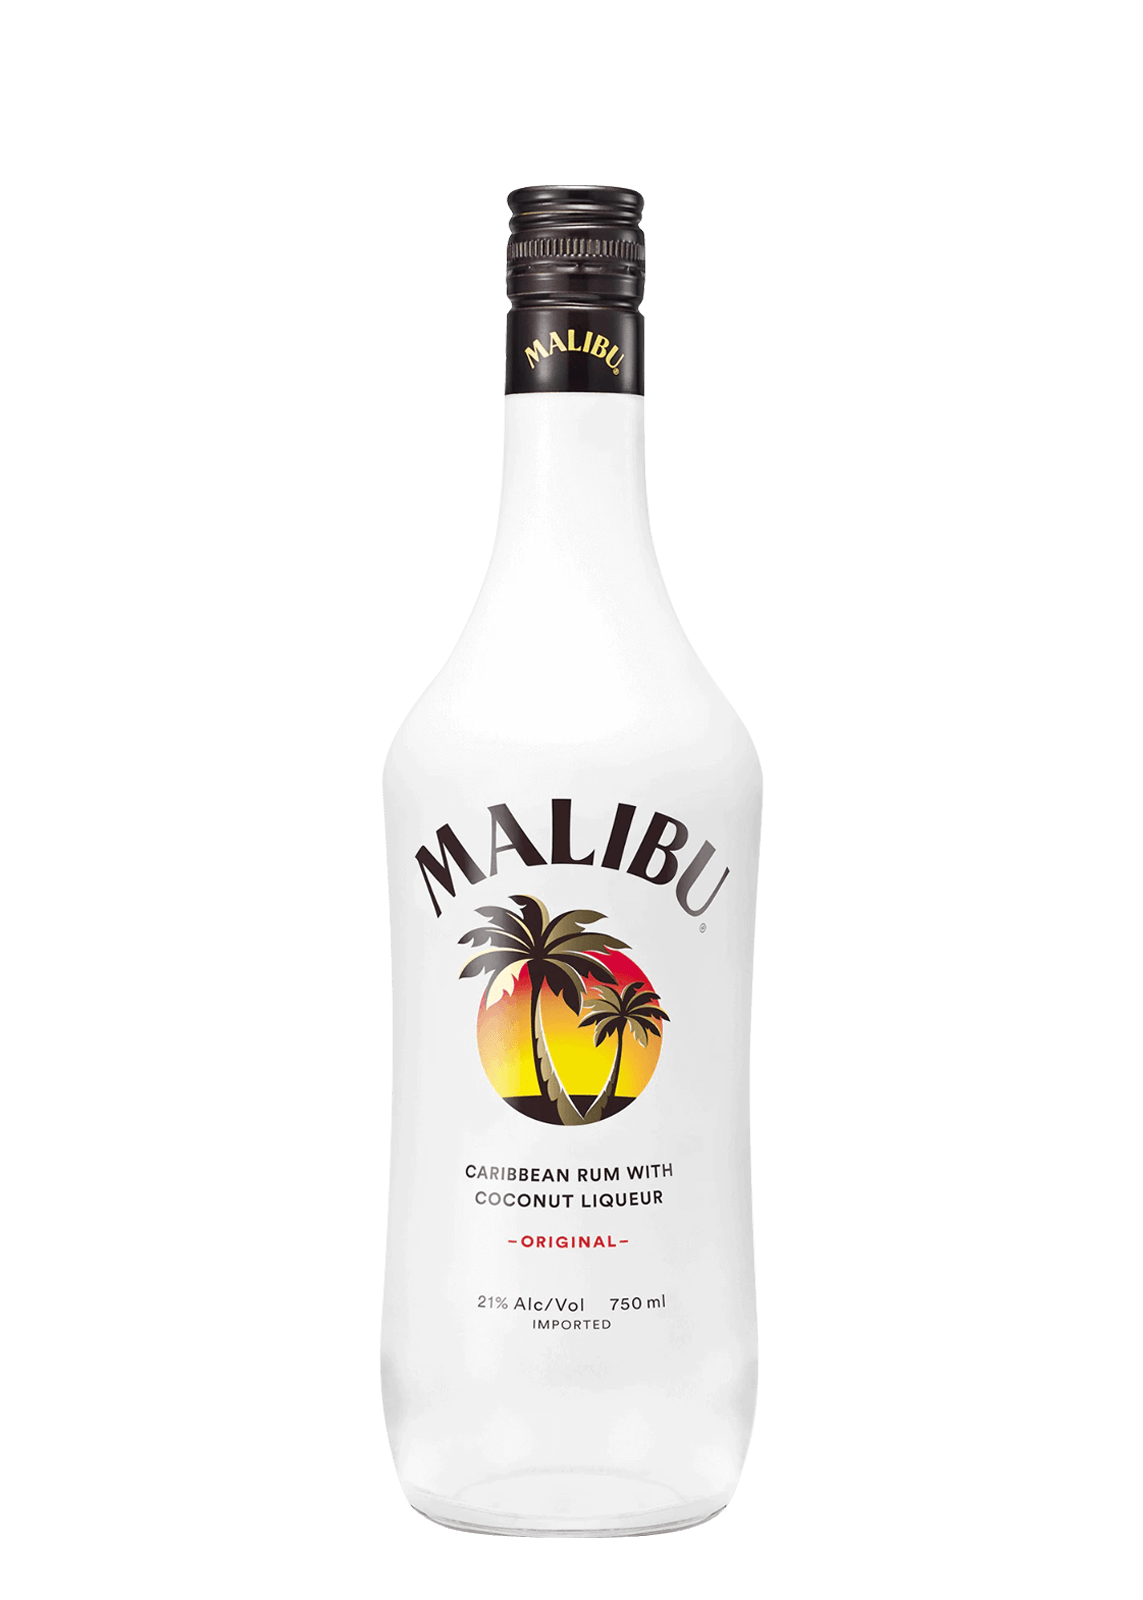 Malibu Drink Flavors : Malibu Rum Png Malibu Rum Flavors Malibu Rum ...